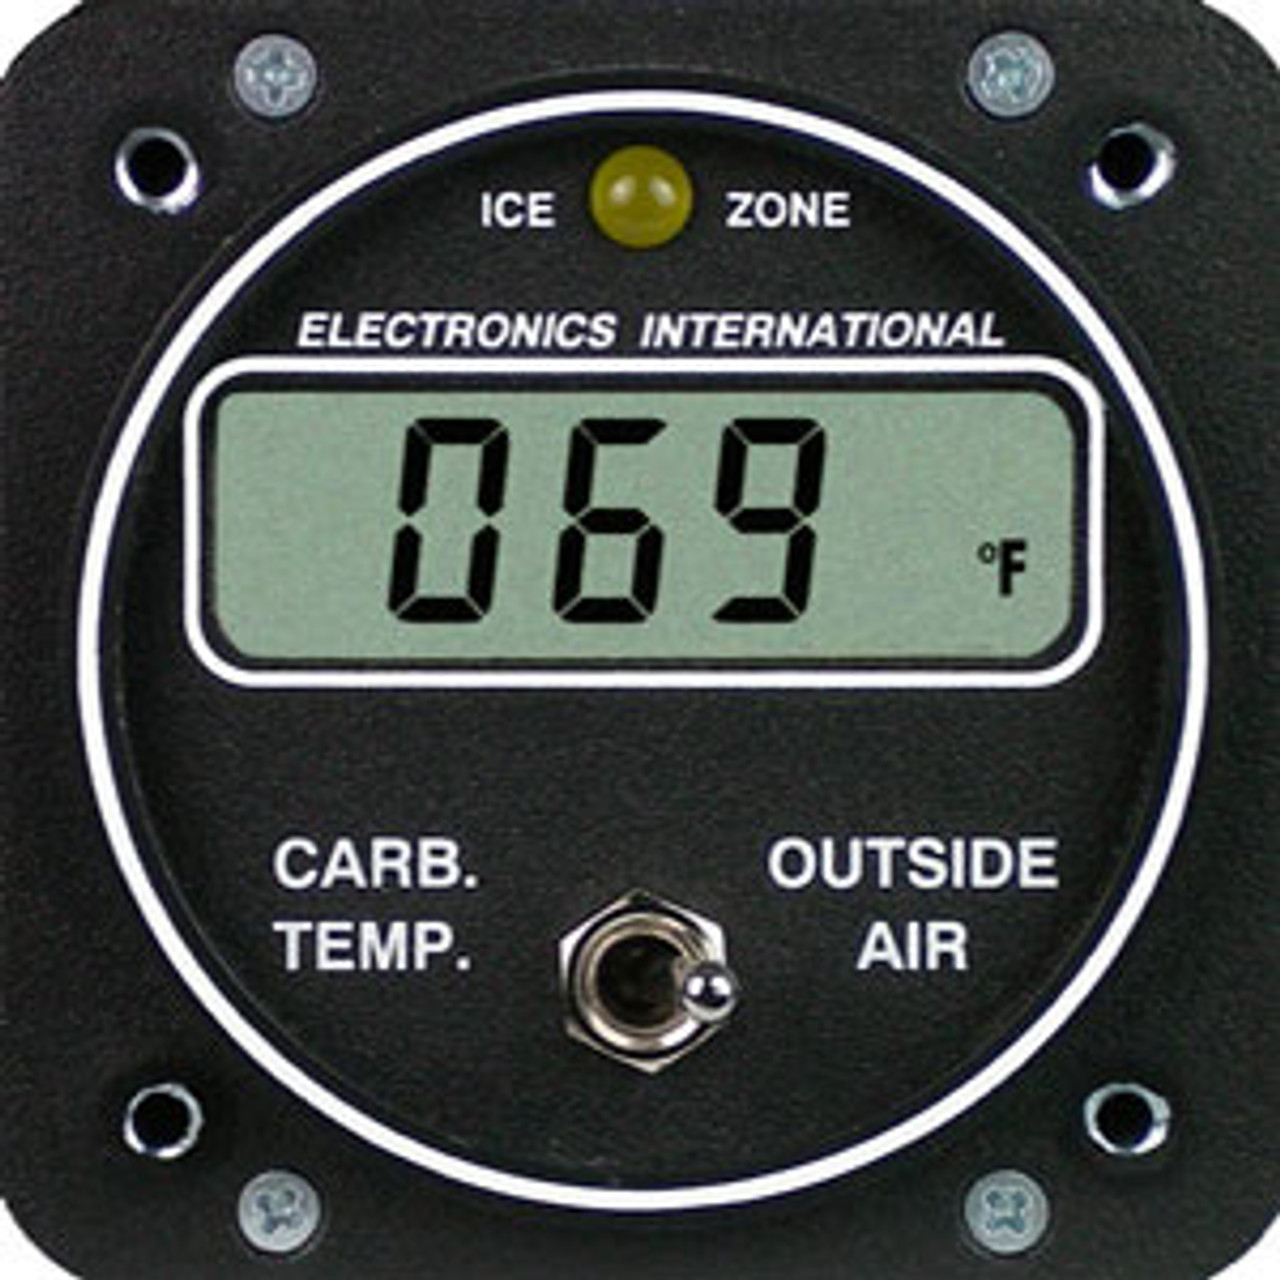 P-128 - OAT/Carb Temp Probe, Electronics International